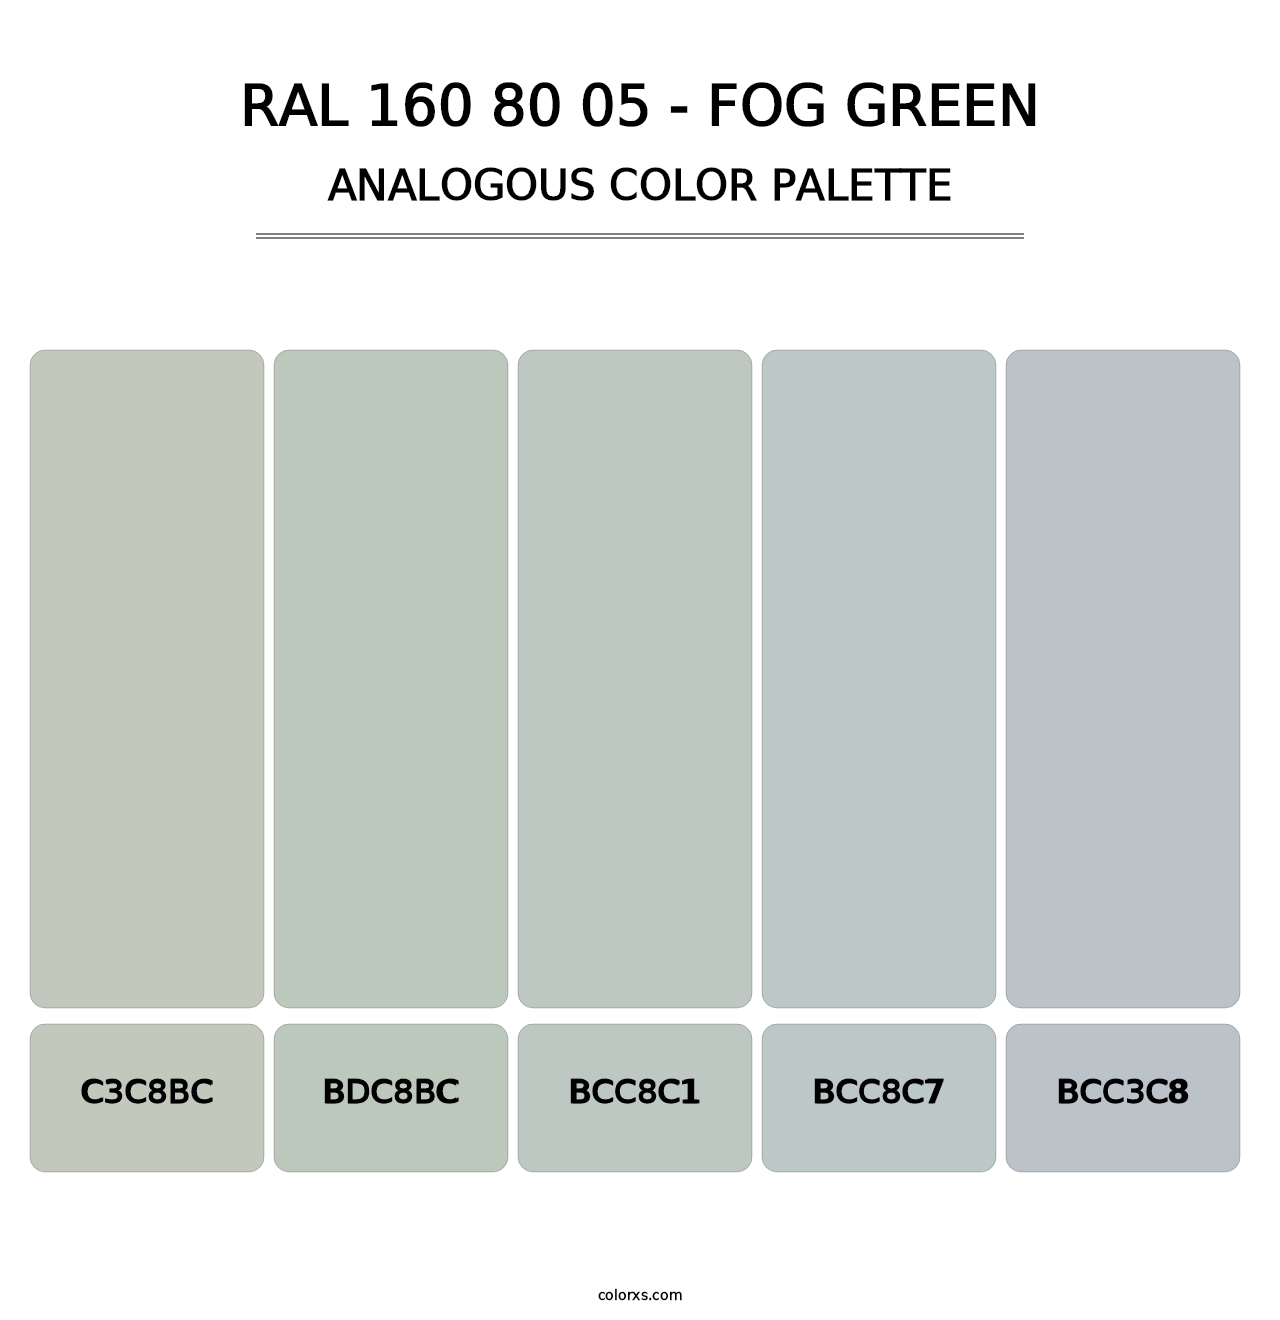 RAL 160 80 05 - Fog Green - Analogous Color Palette